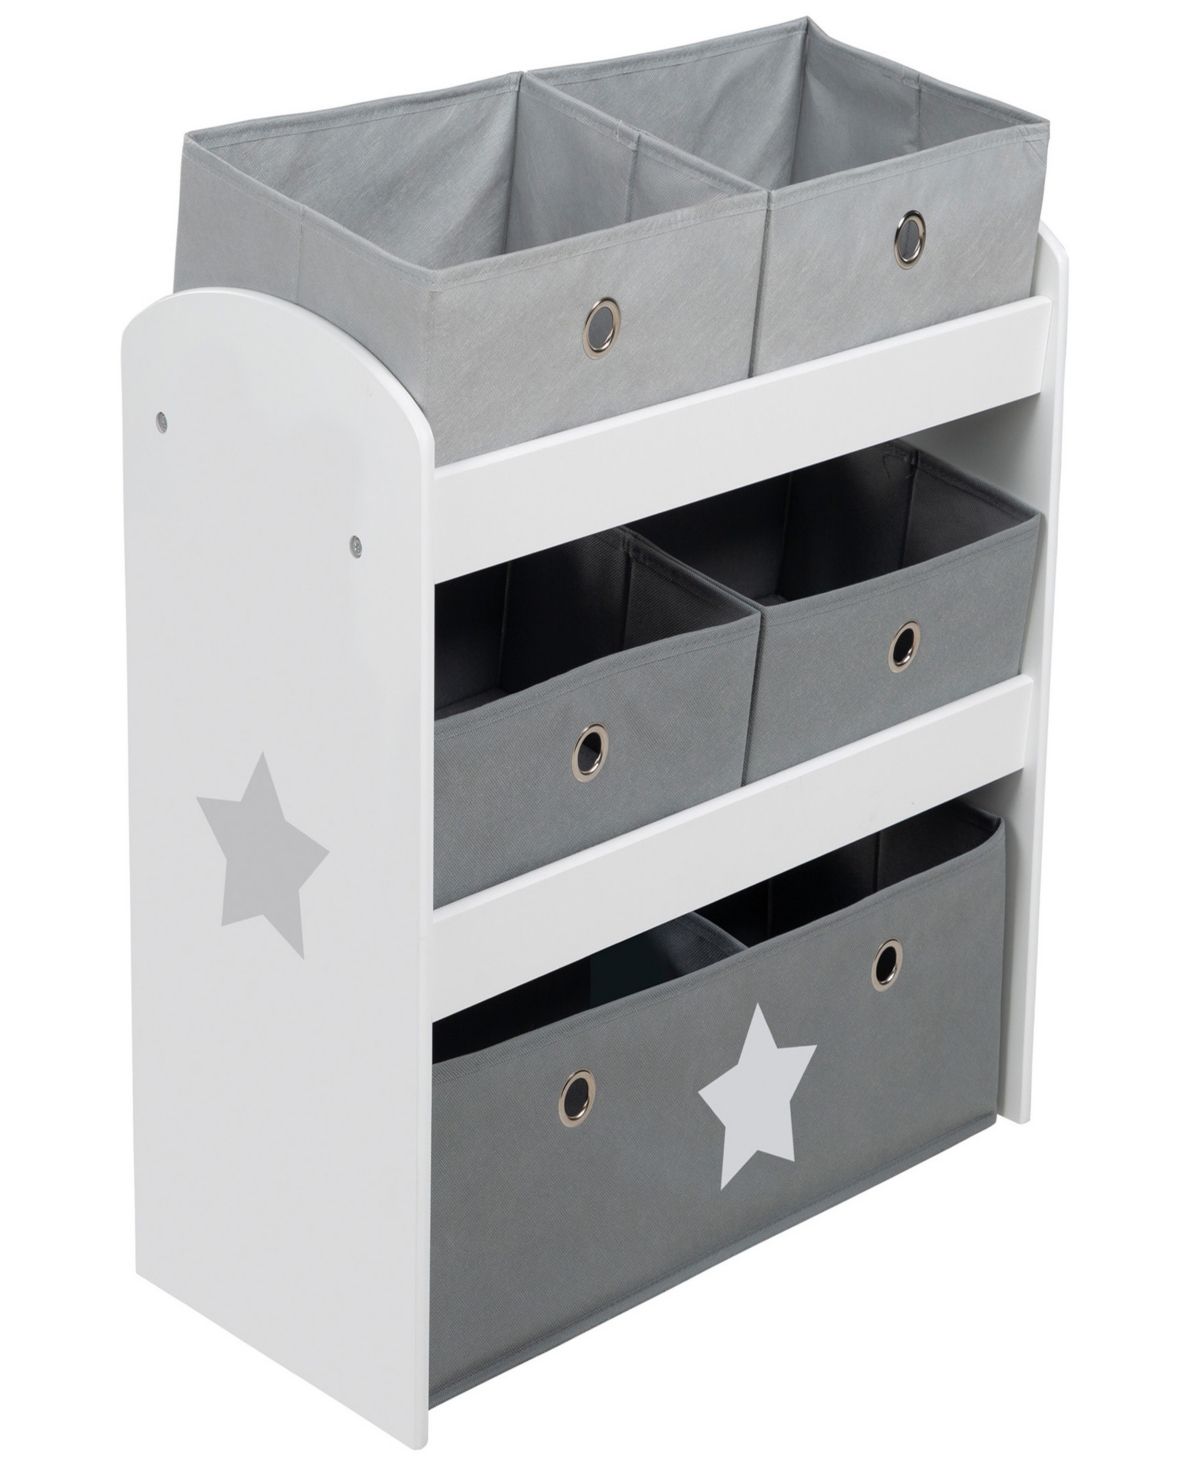 Roba-kids Kids' Play Shelf Stars Children's Multi Bin Toy Organizer Shelf Storage Cabinet With Fabric Boxes Set, 6 P